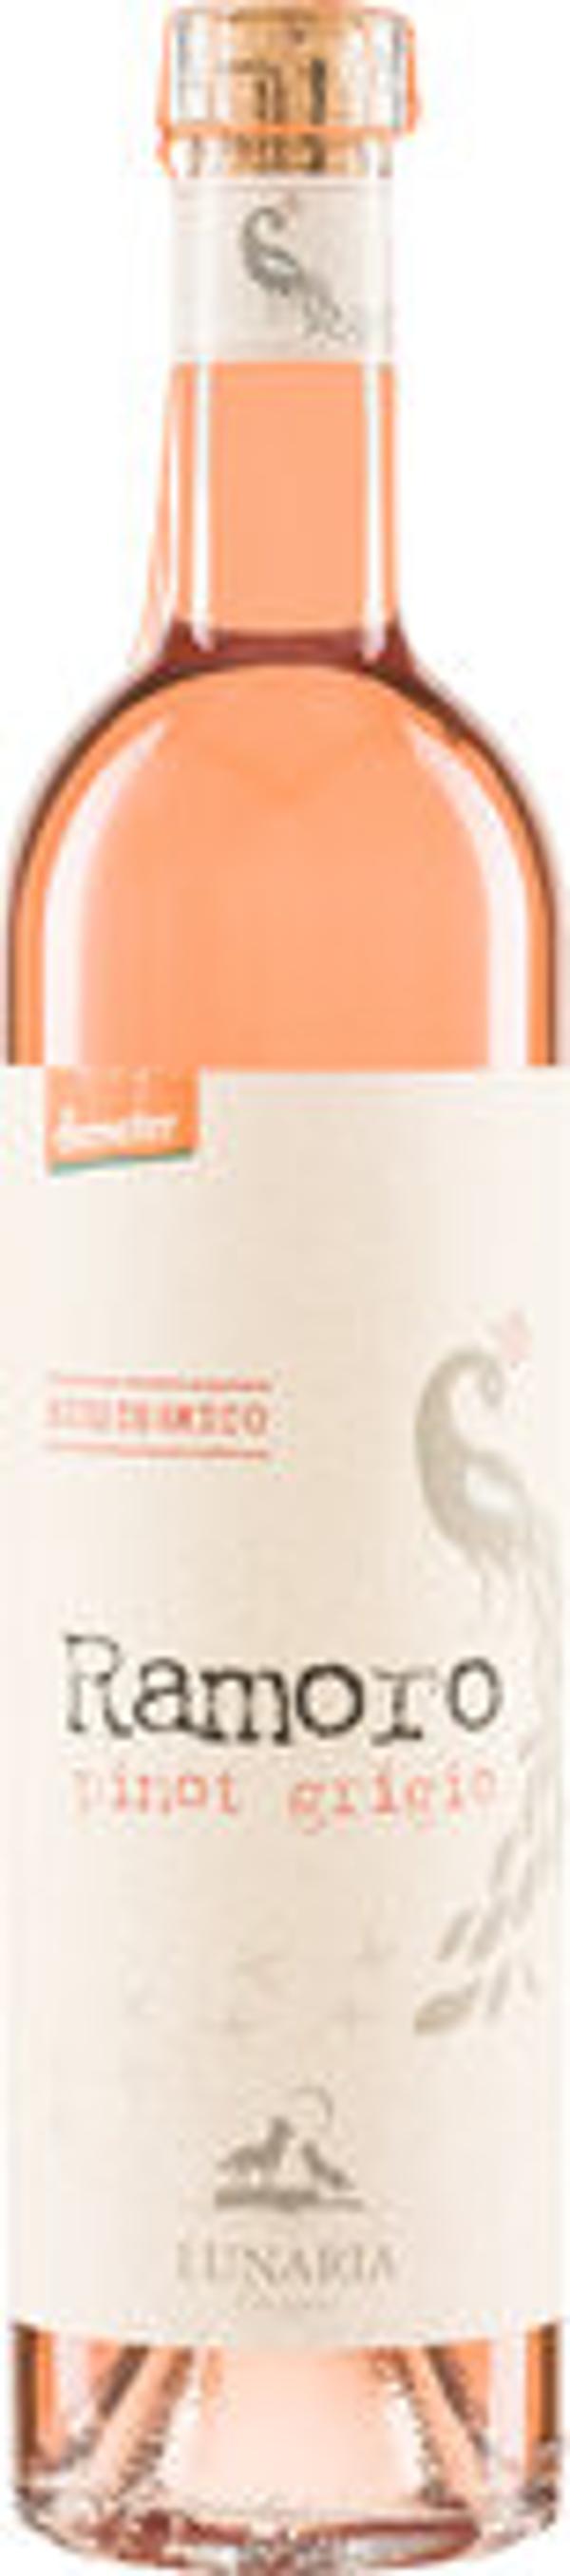 Produktfoto zu Ramoro Pinot Grigio weiß 0,75 l Olearia Orsogna